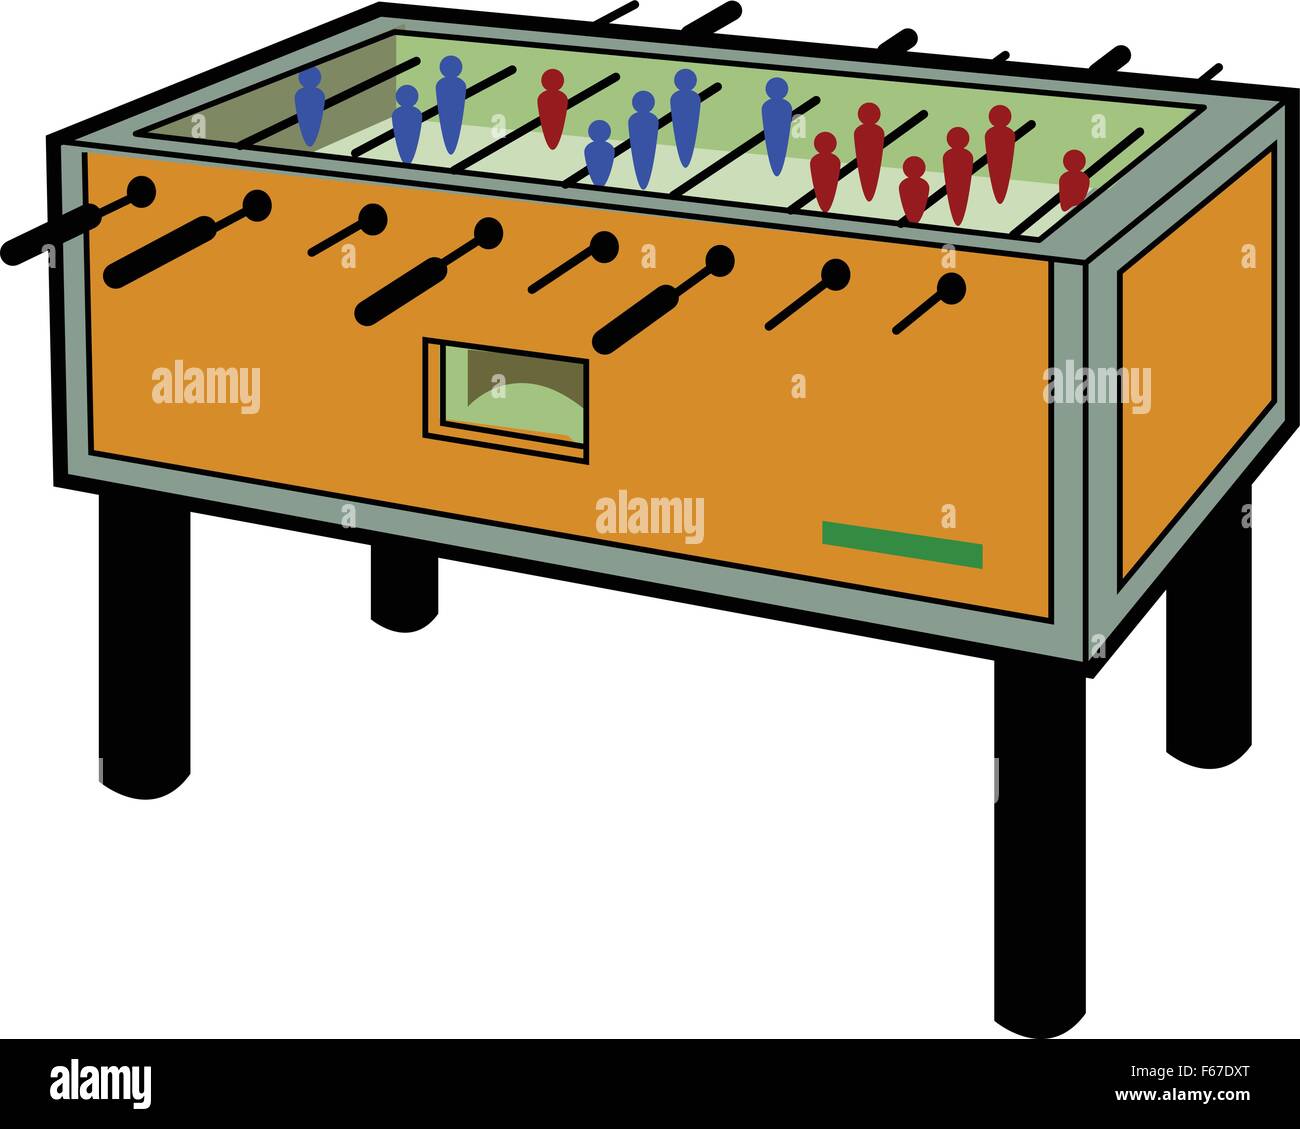 Cartoon Illustration of a Foosball Table Stock Vector